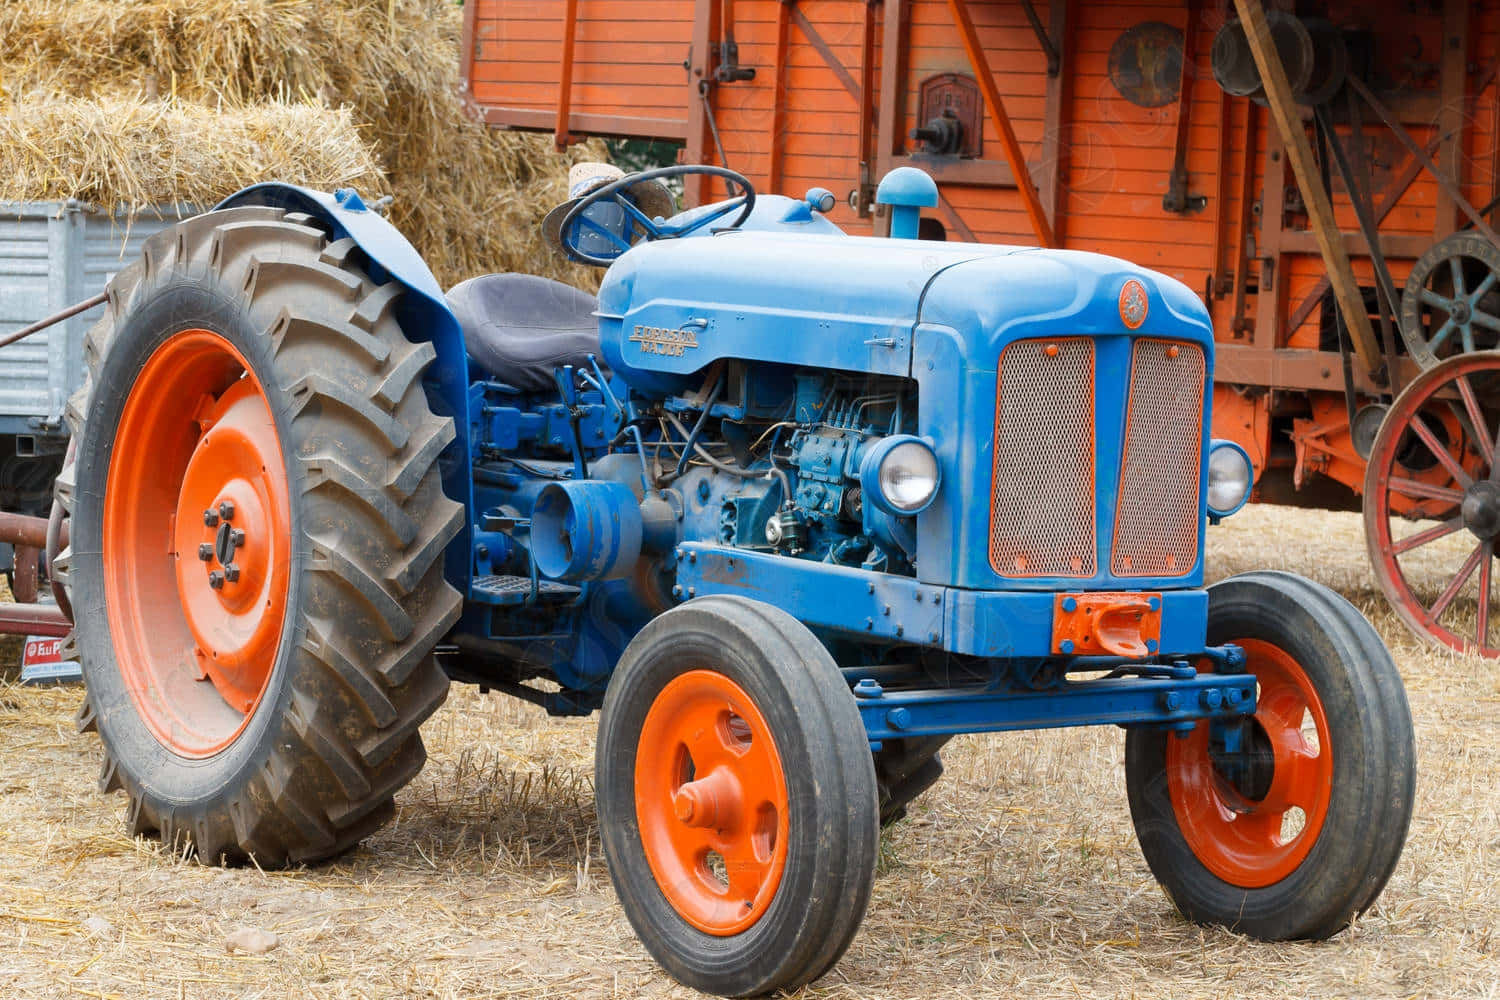 Imagende Un Antiguo Tractor En Chivasso, Italia.